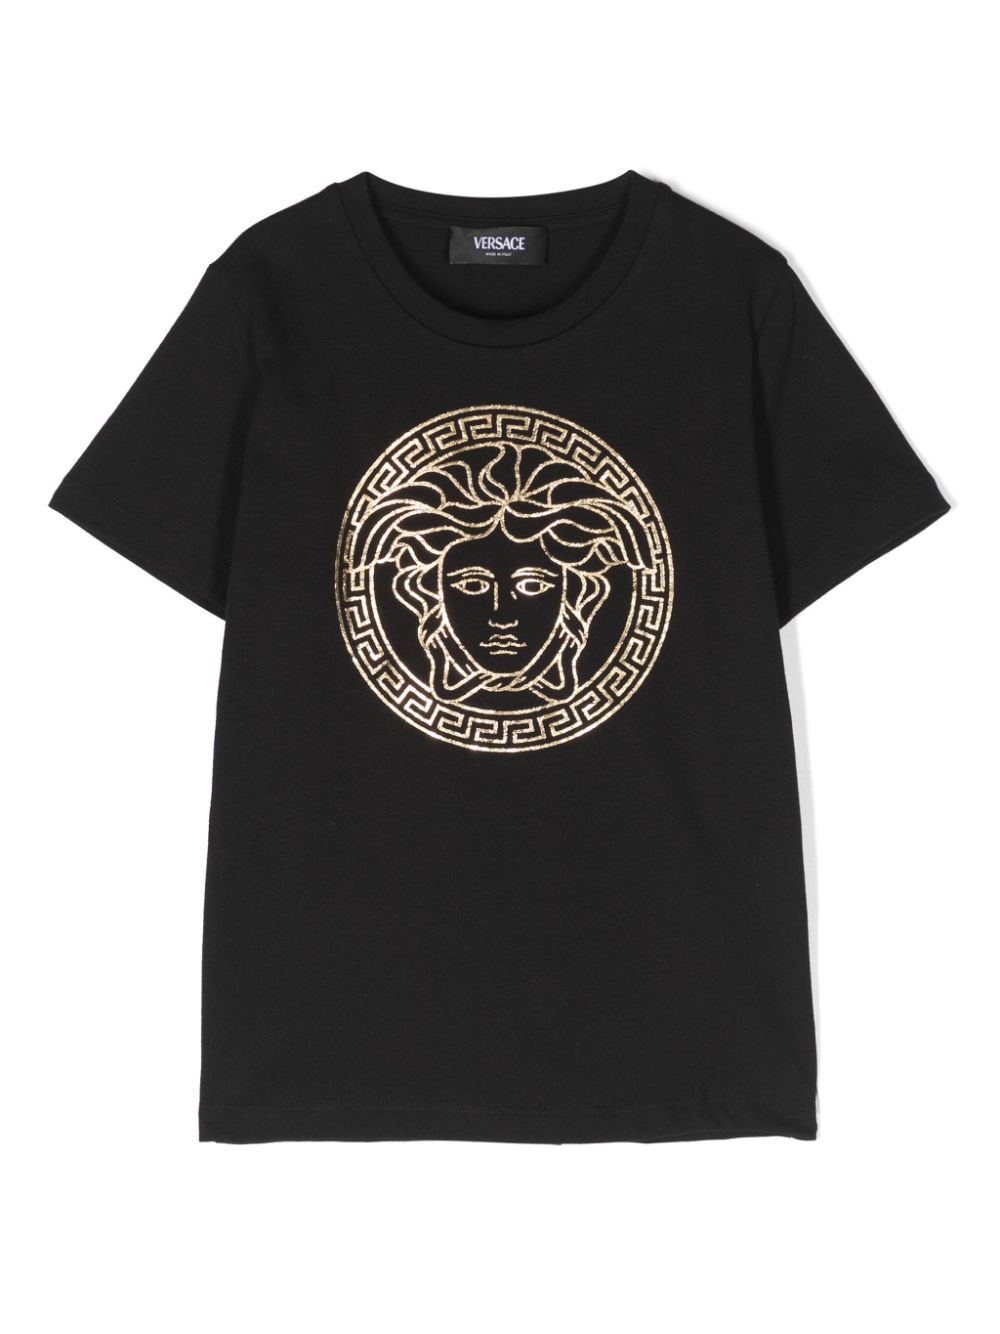 Black children's t-shirt with gold logo